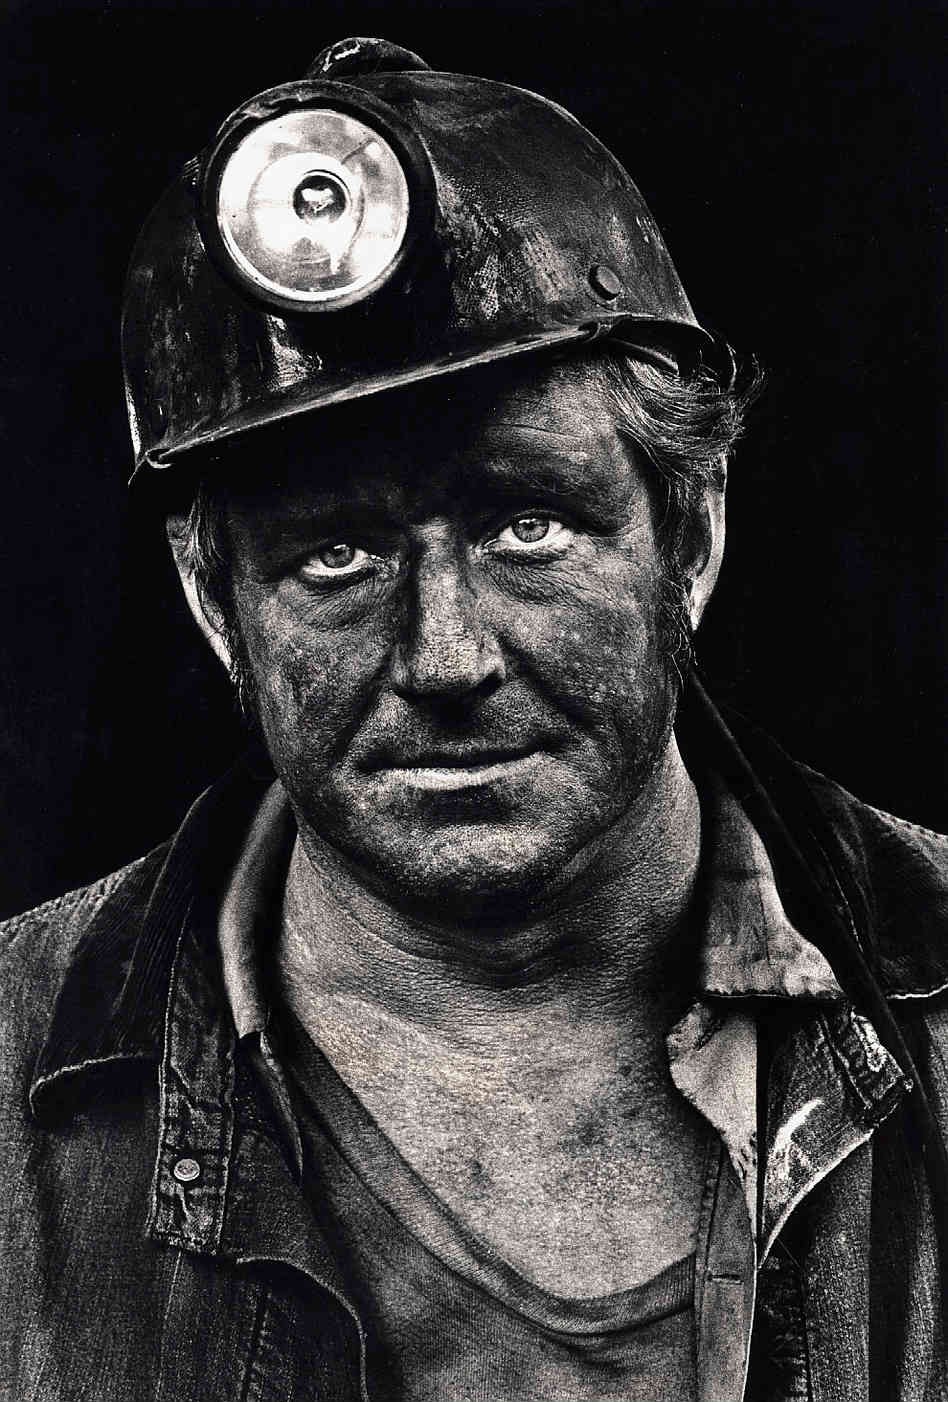 Coal mining is harder